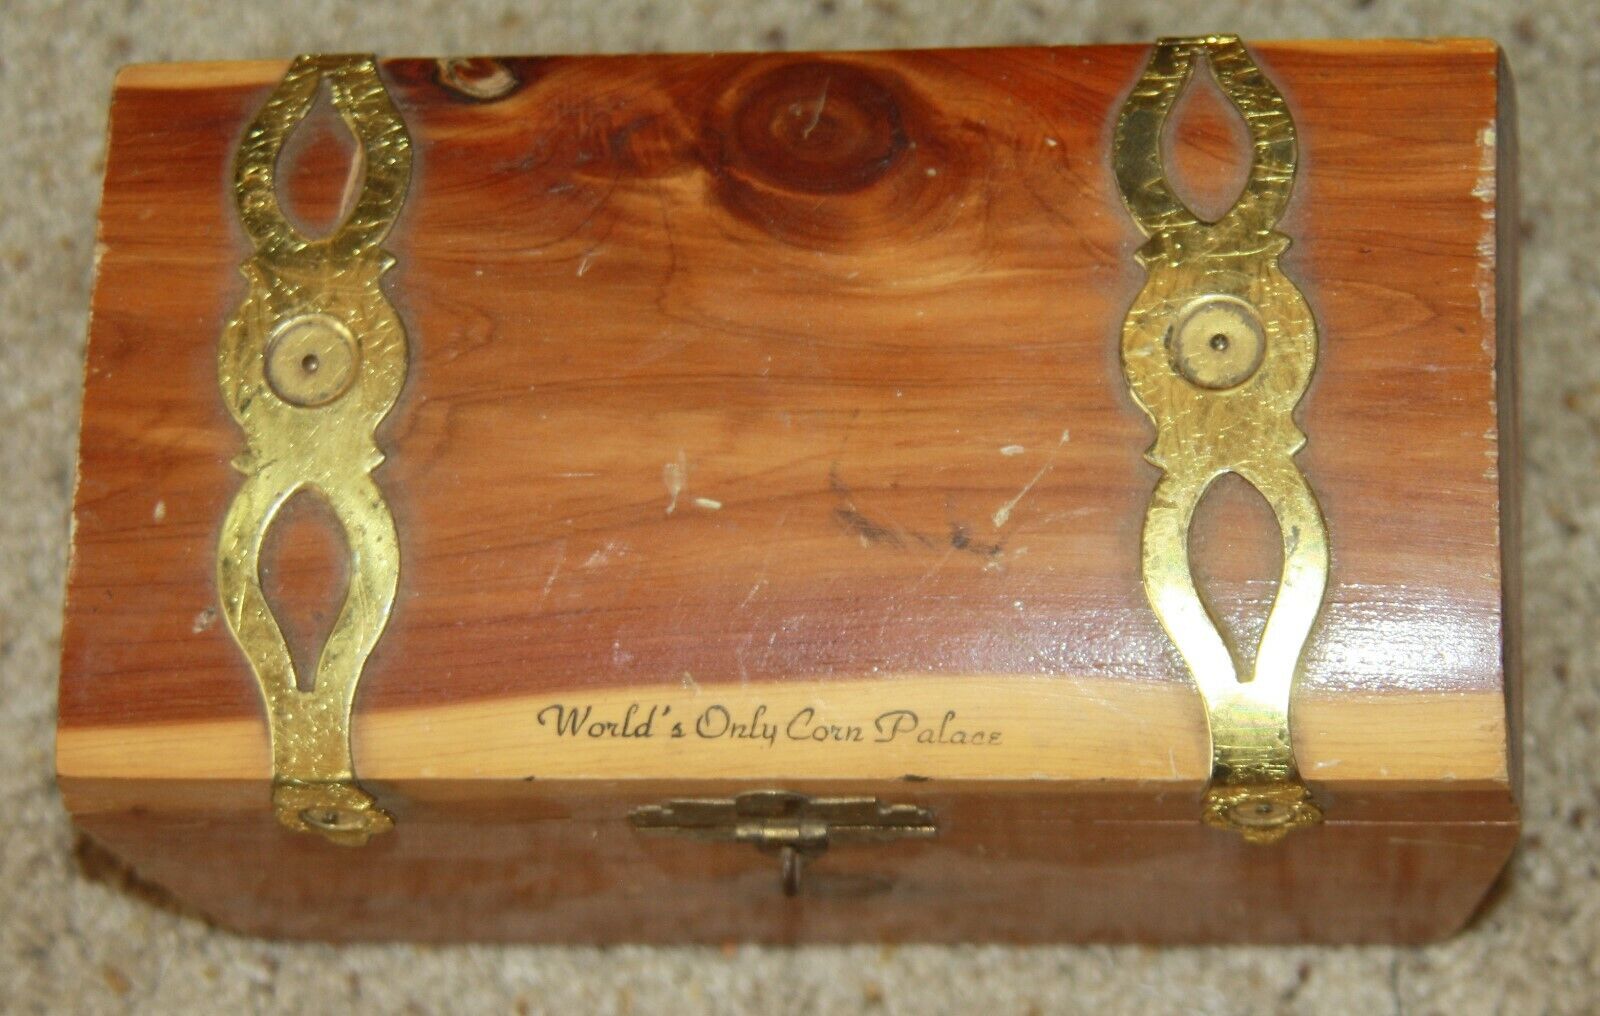 Vintage Corn Palace souvenir cedar wood jewelry trinket box South Dakota